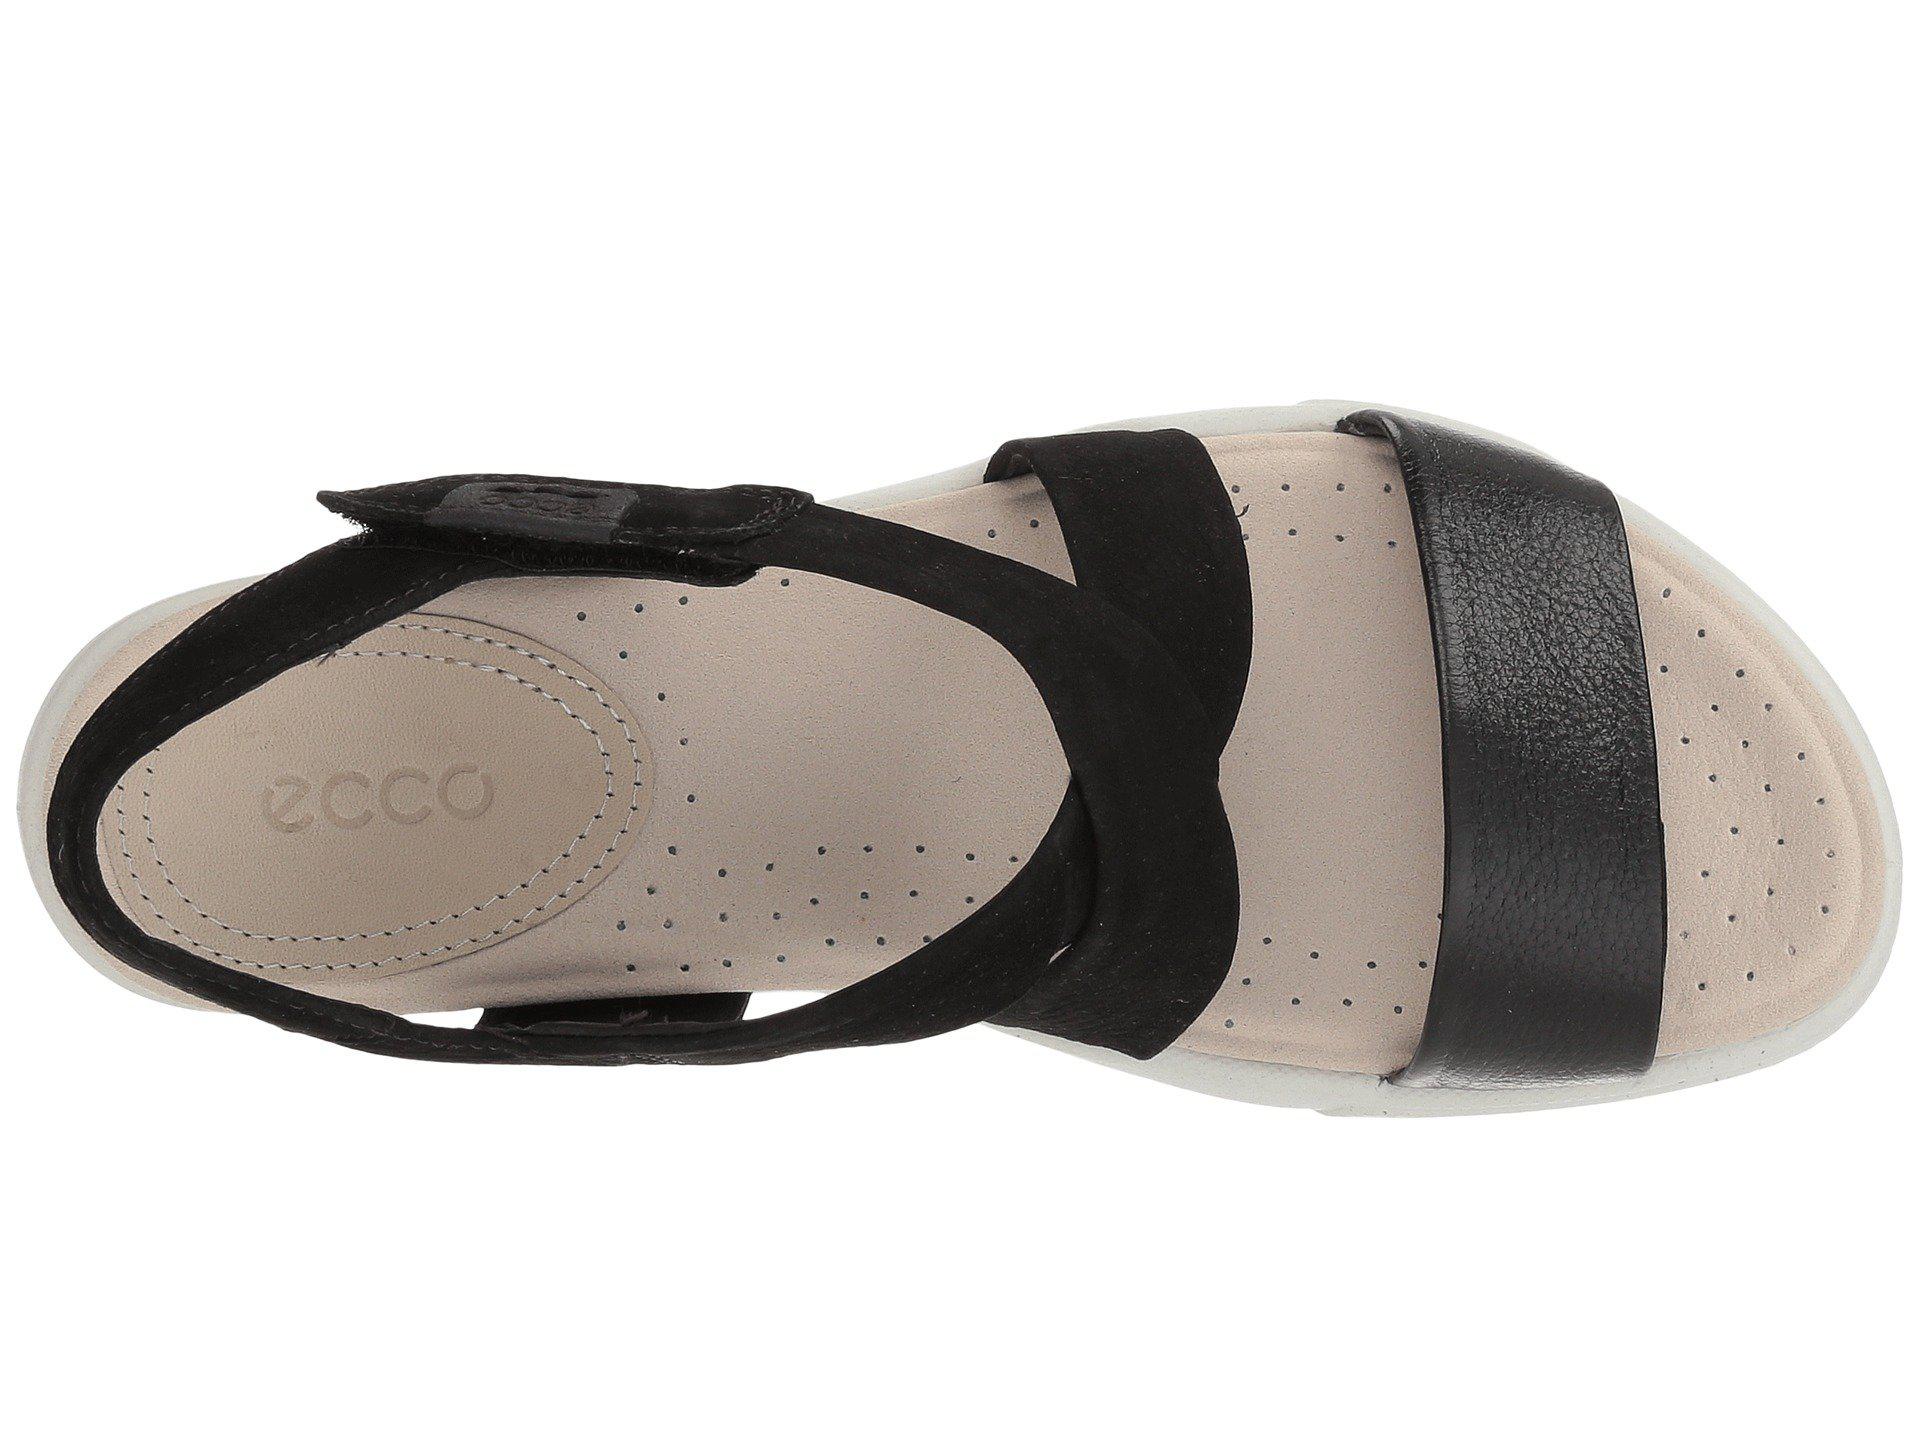 Ecco Leather Damara Gladiator Sandals in Black/Black Leather/Cow Nubuck  (Black) | Lyst